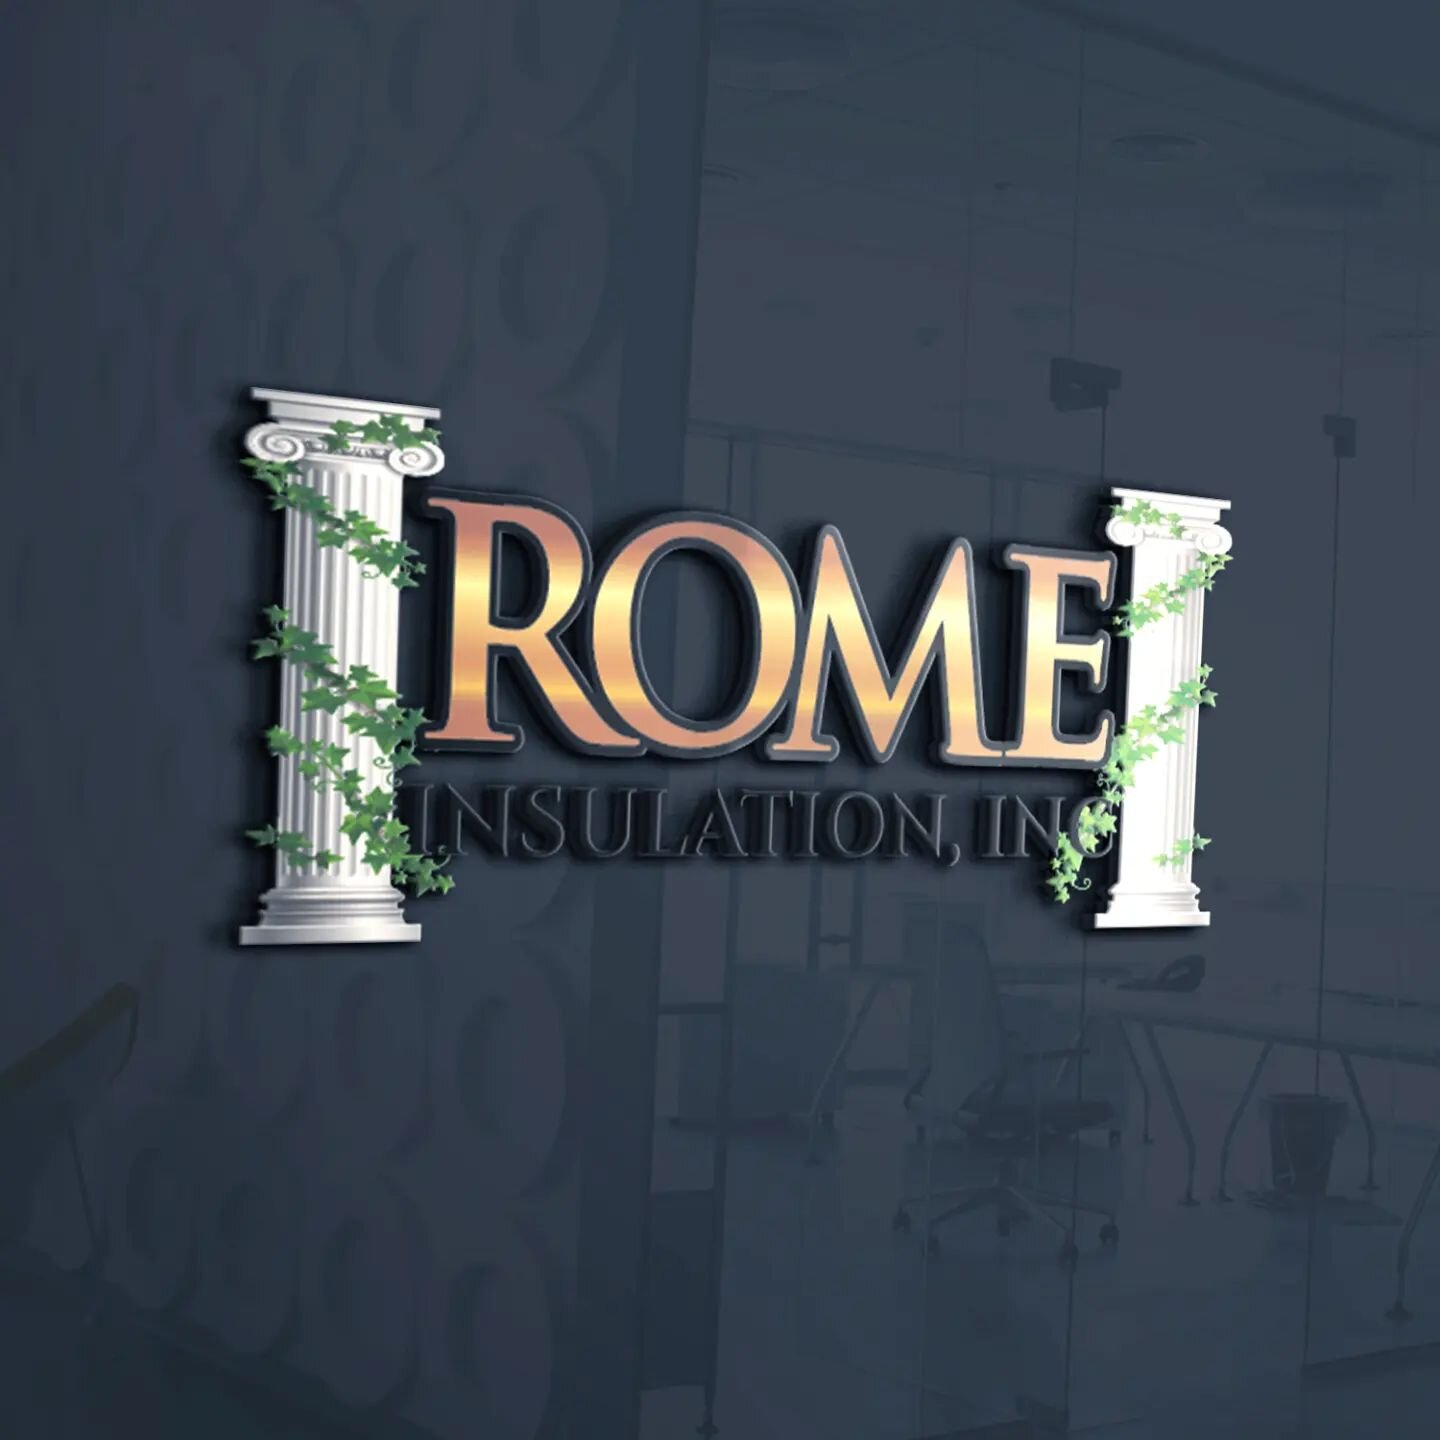 Rome Insulation, Inc